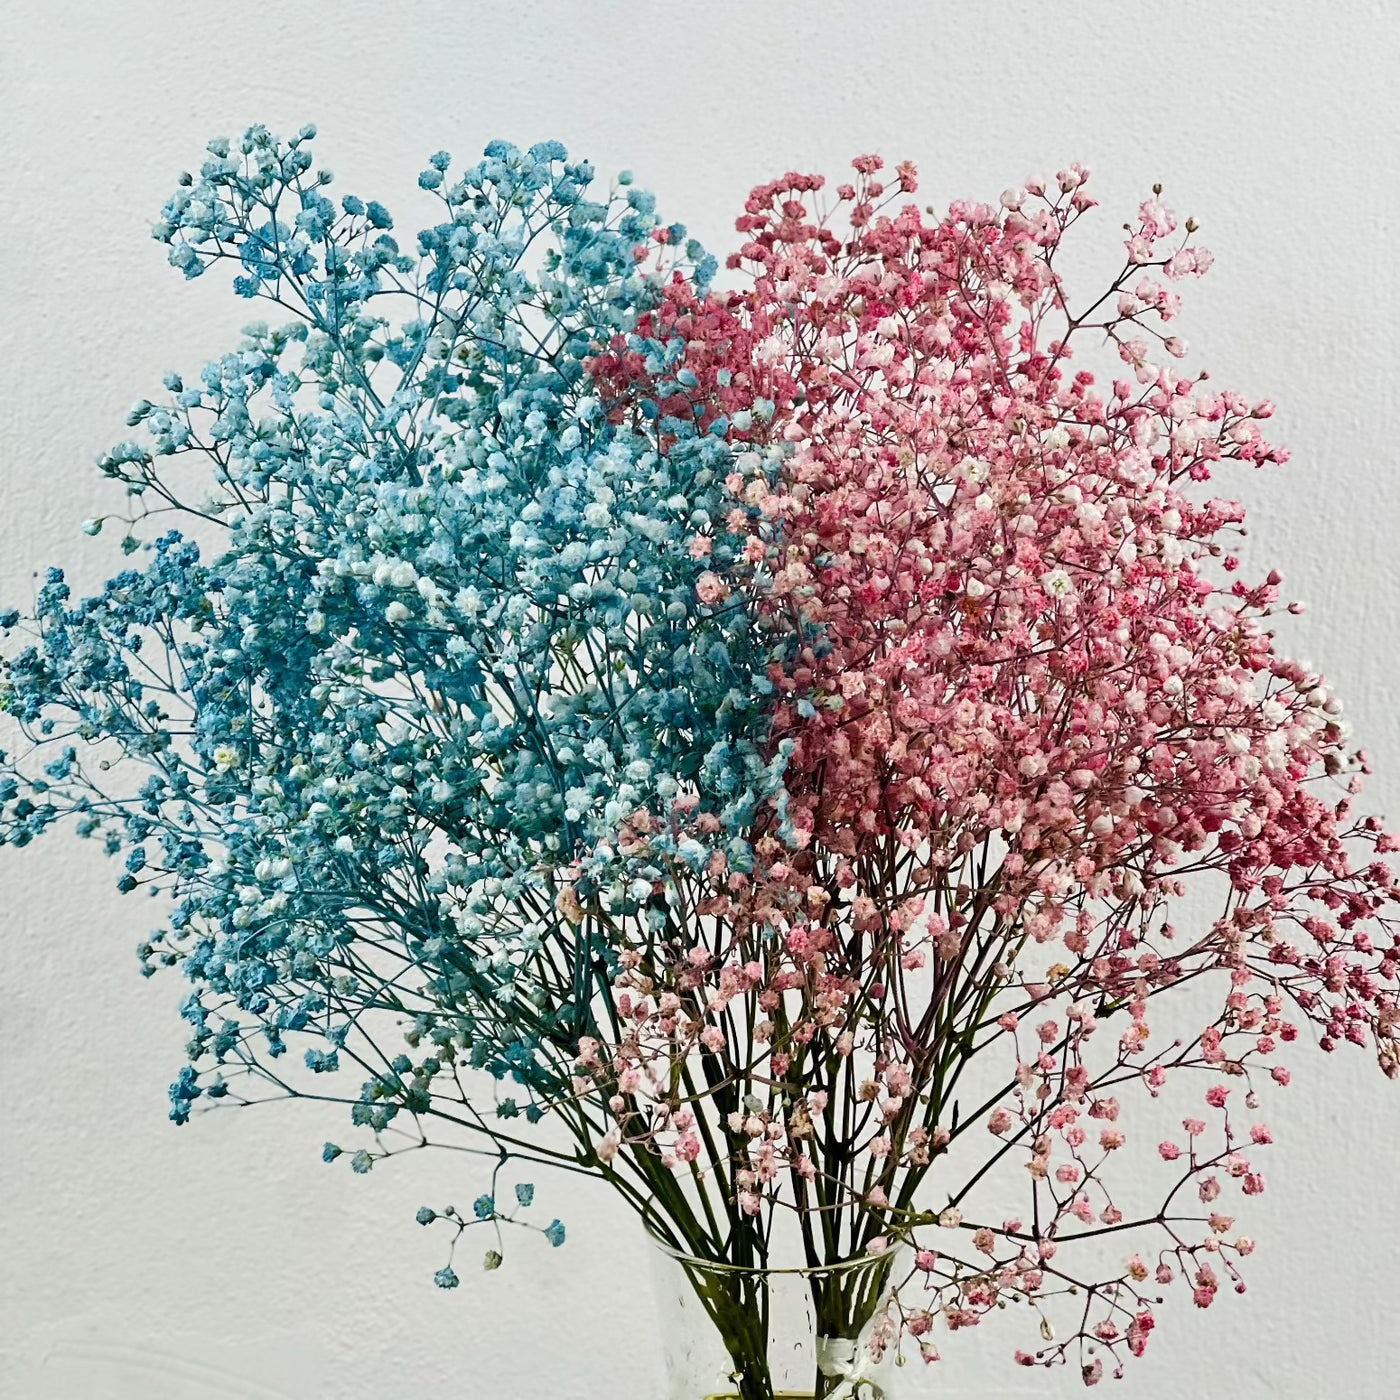 Paniculata azul y rosa